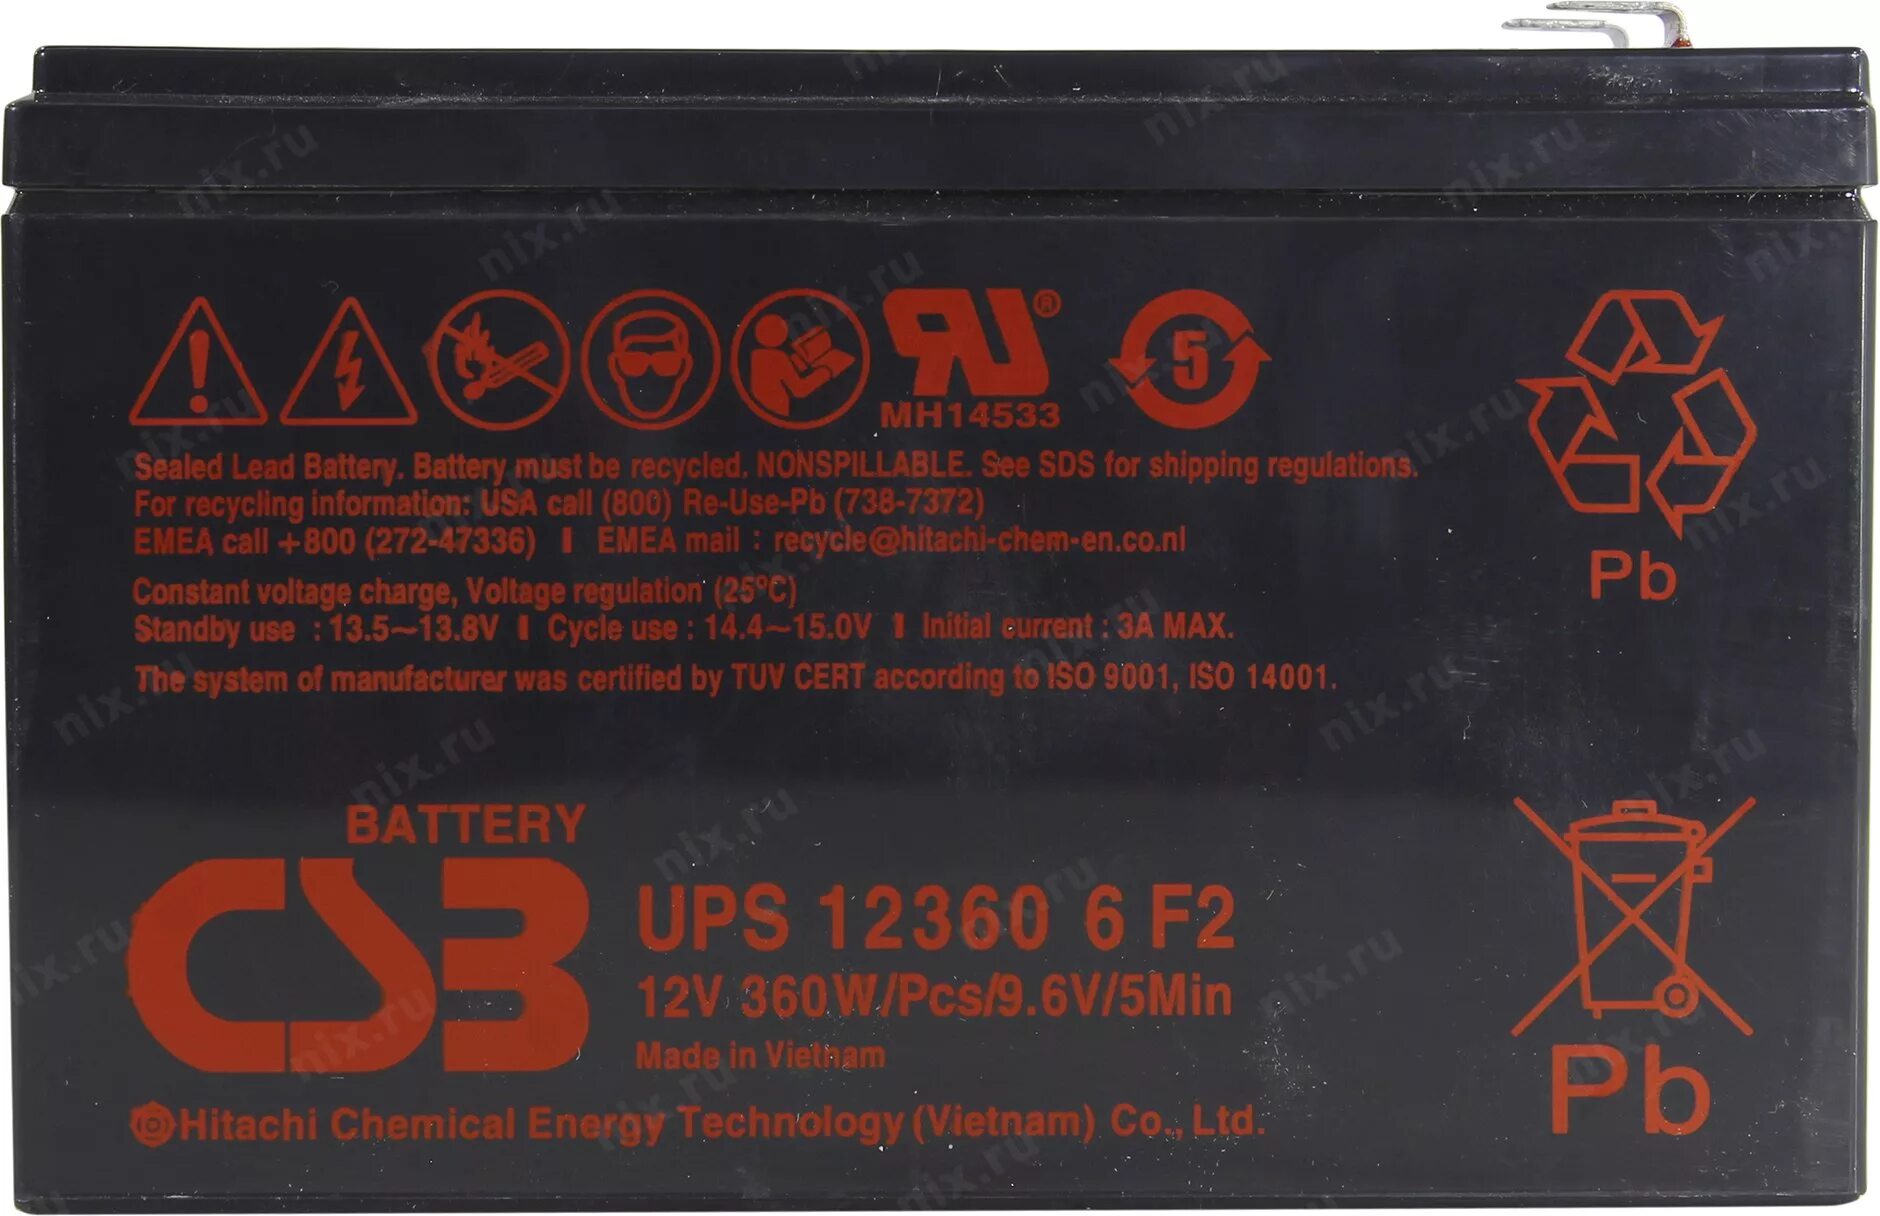 Аккумулятор CSB ups 123606. АКБ 12-5 CSB ups (ups122406 f2). Ups 12360 7 f2 12v 360w/PCS/9.6V/5min. Аккумулятор ups12360 7 f2. Батарея f2 12v